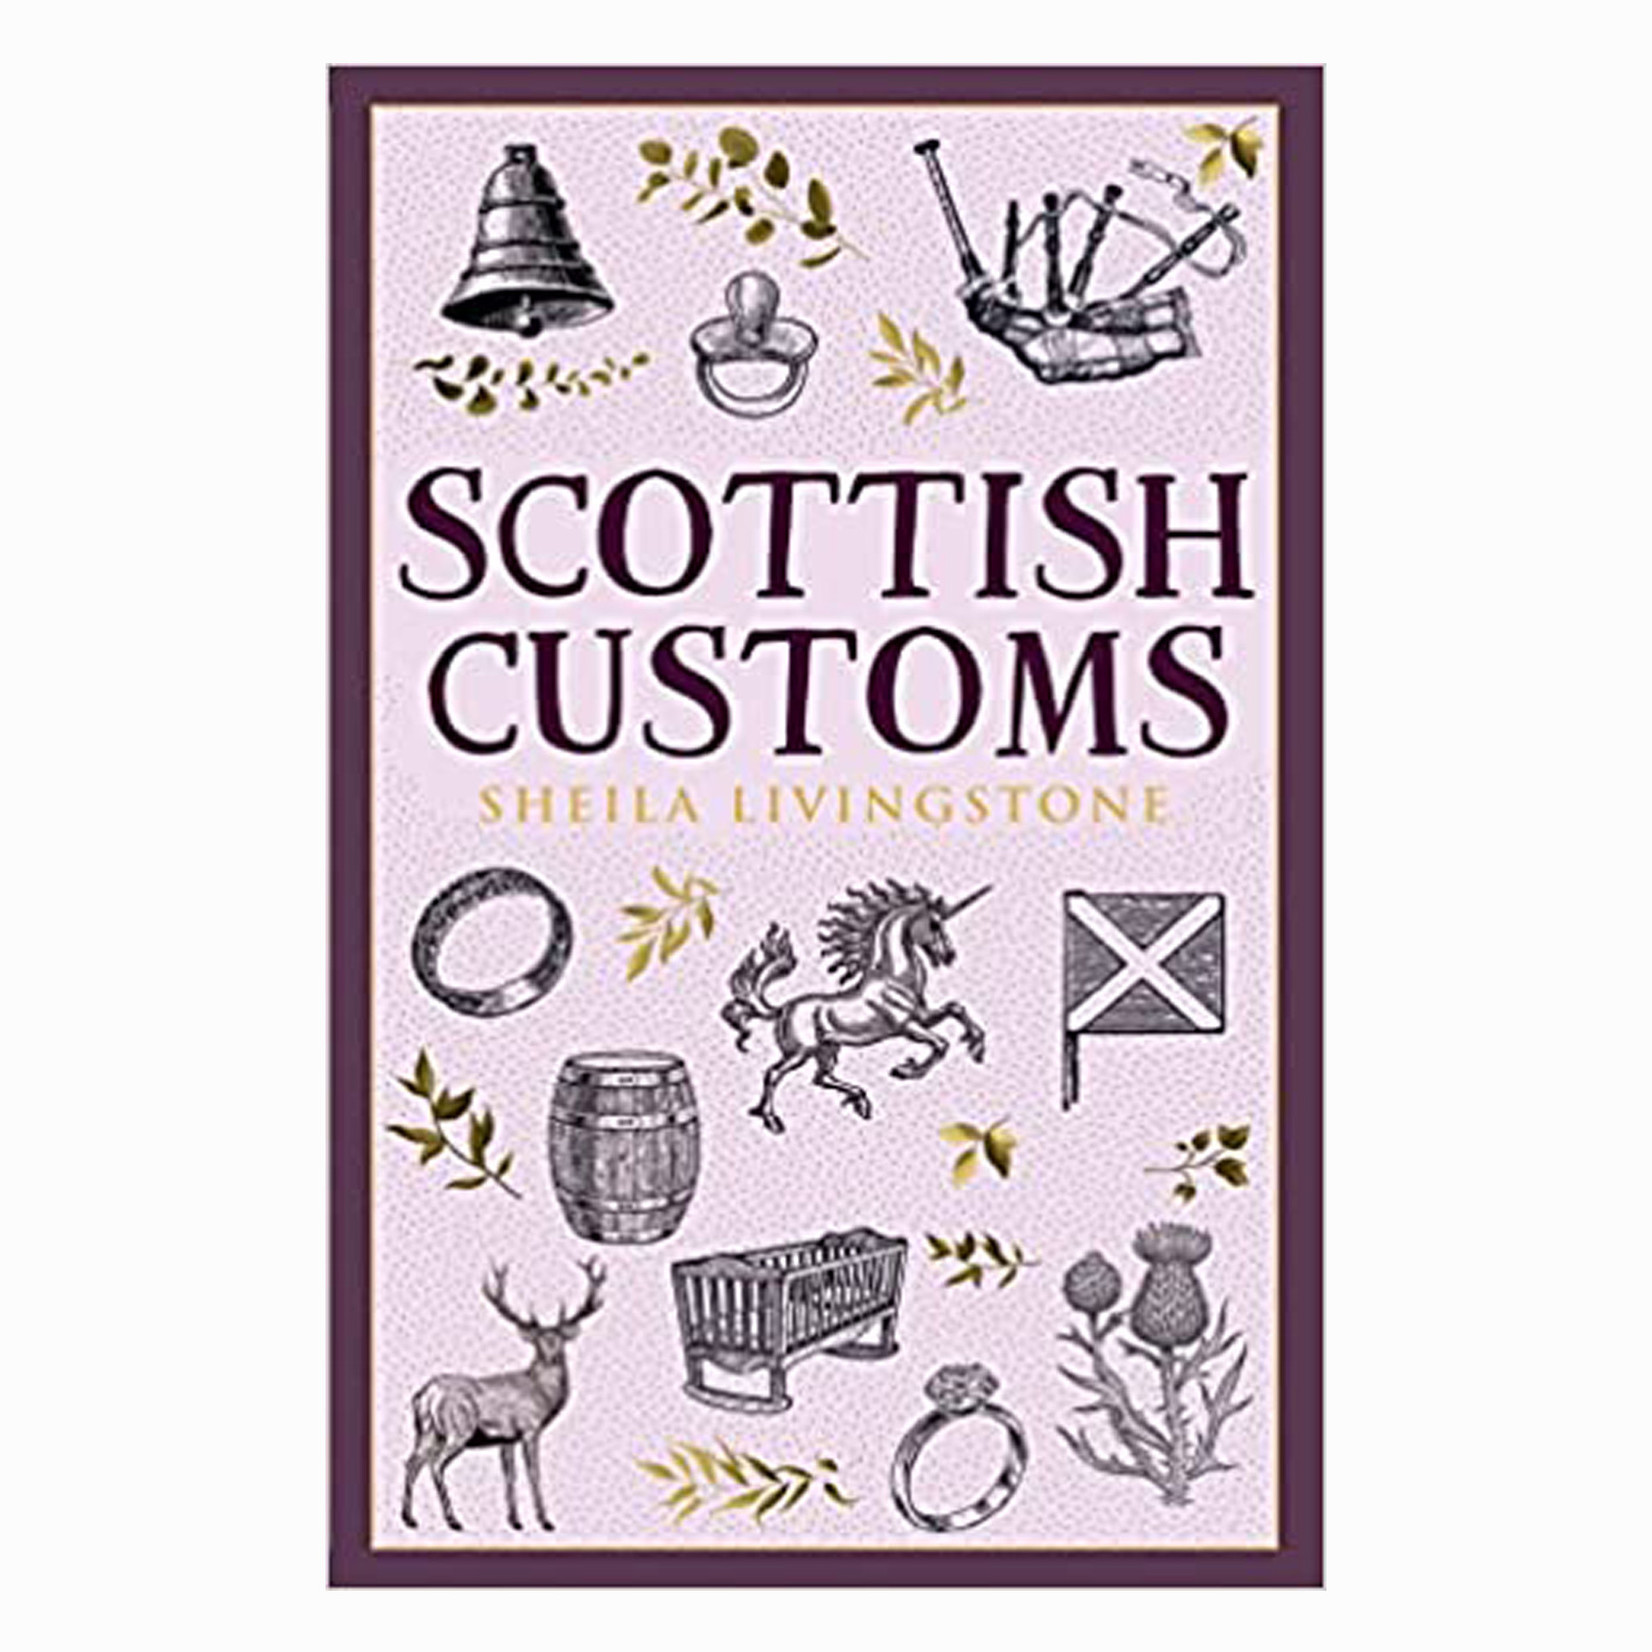 Celtic Books "Scottish Customs" by Sheila Livingstone